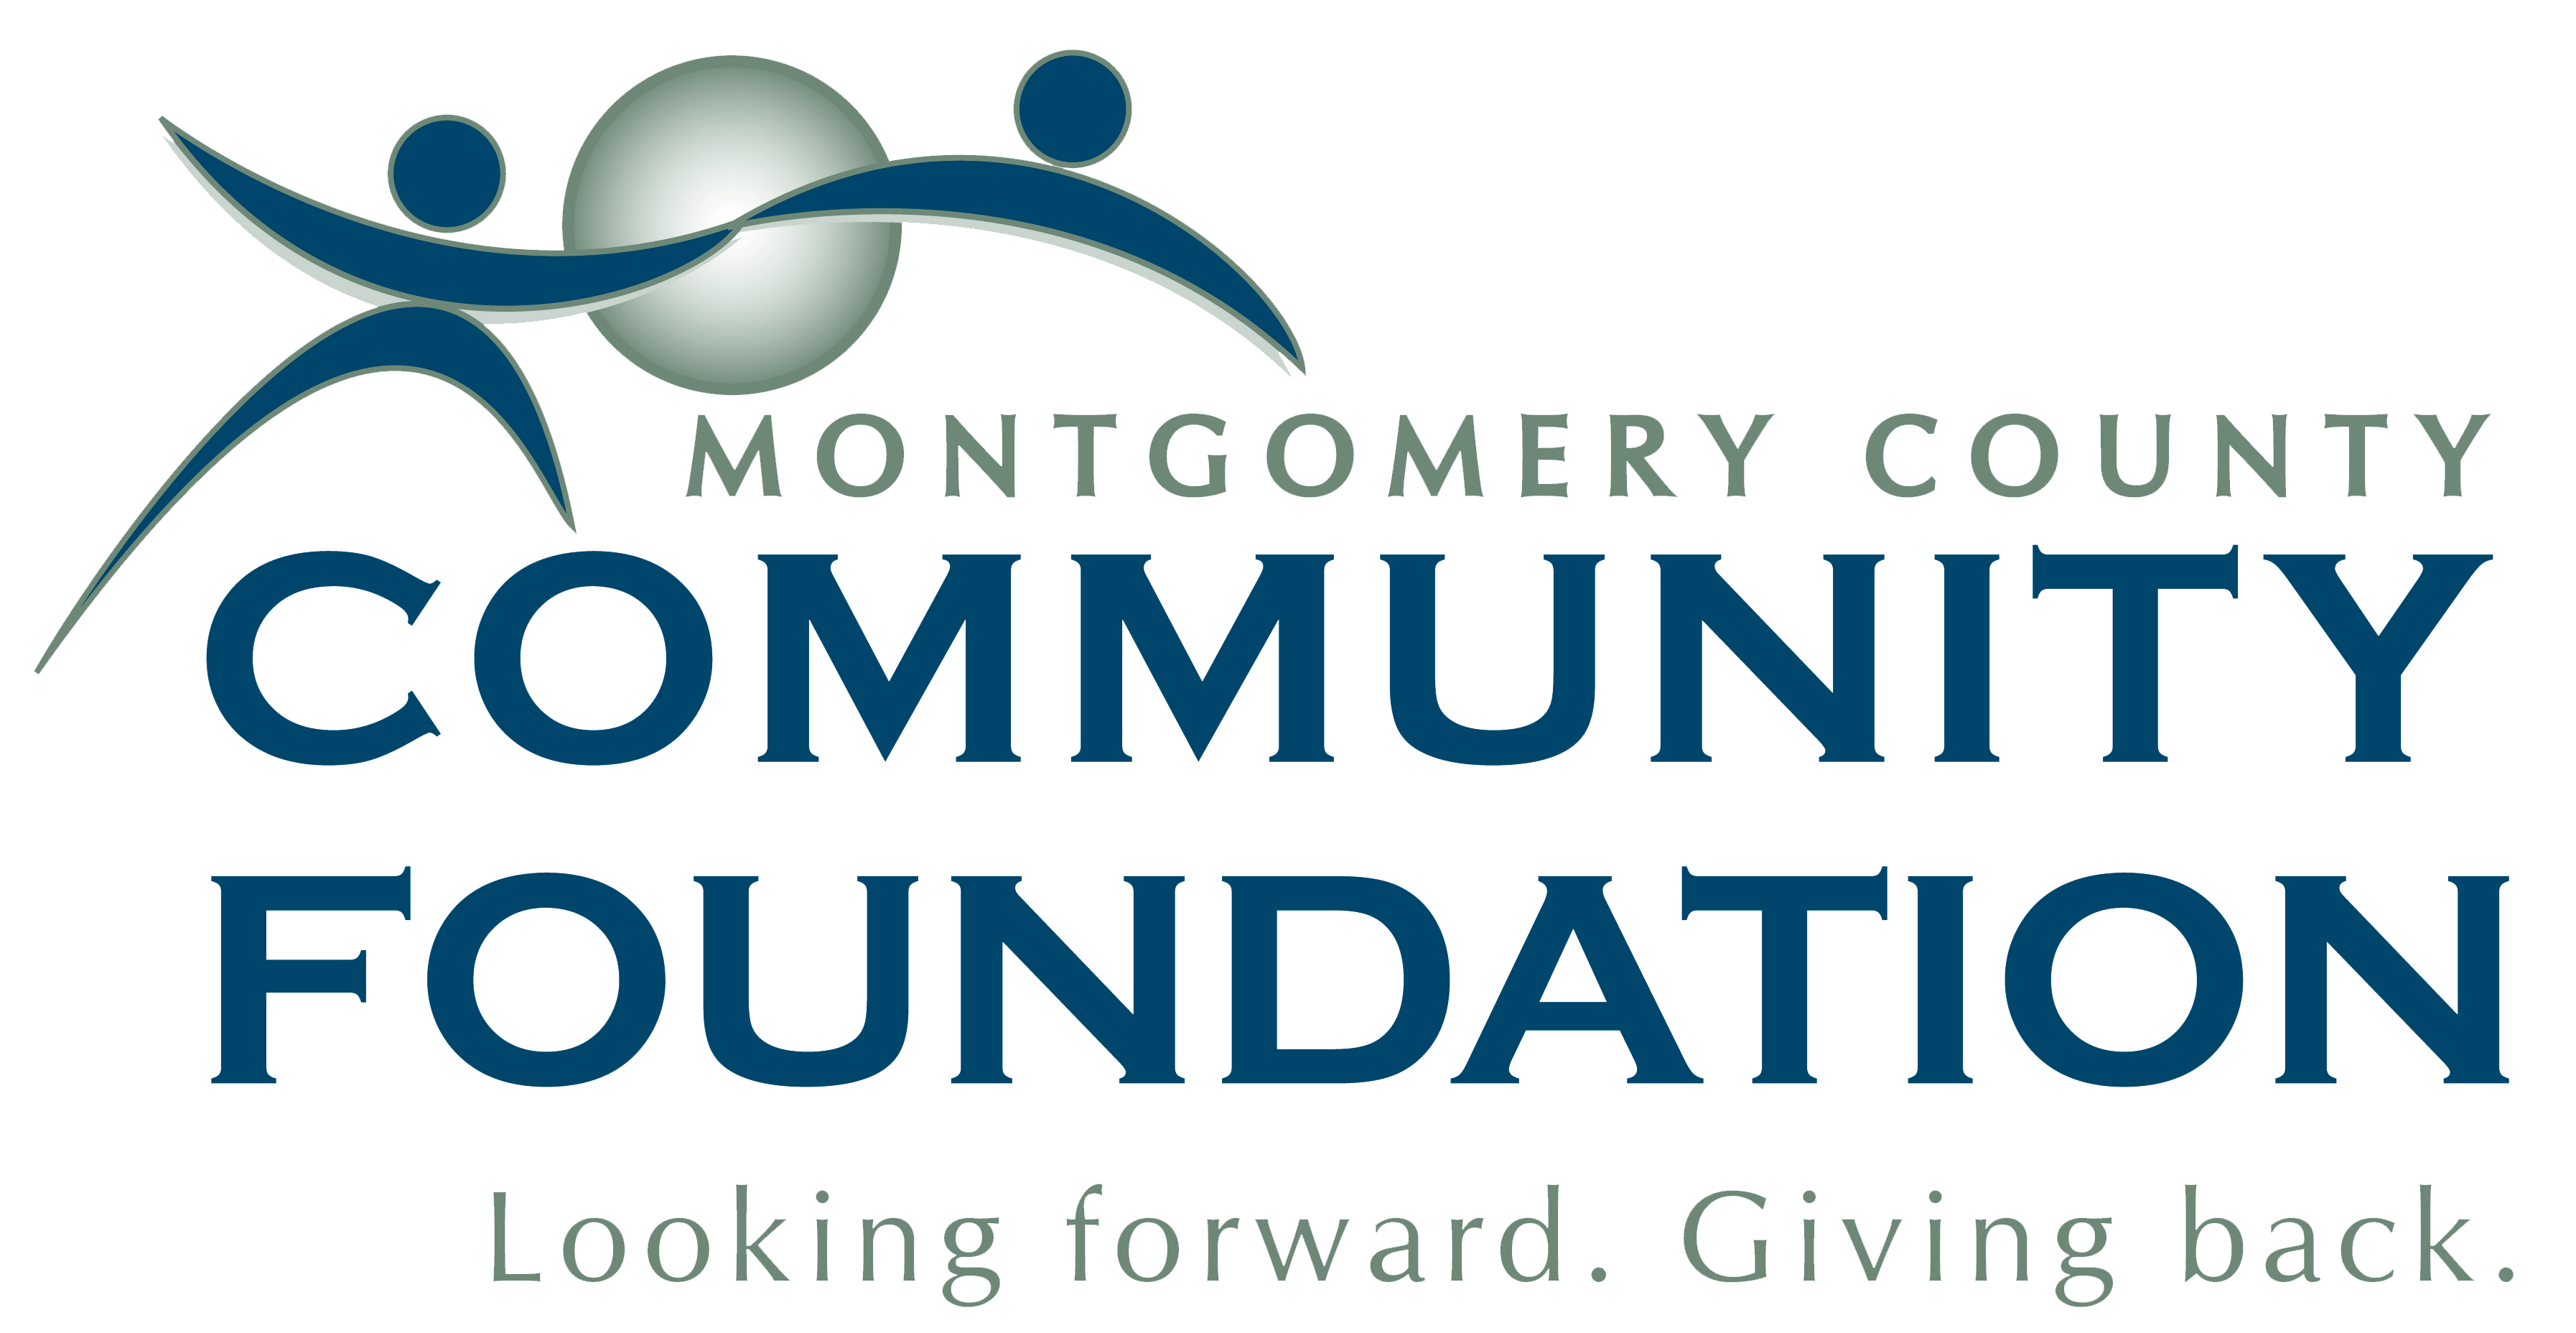 Montgomery County community foundation logo